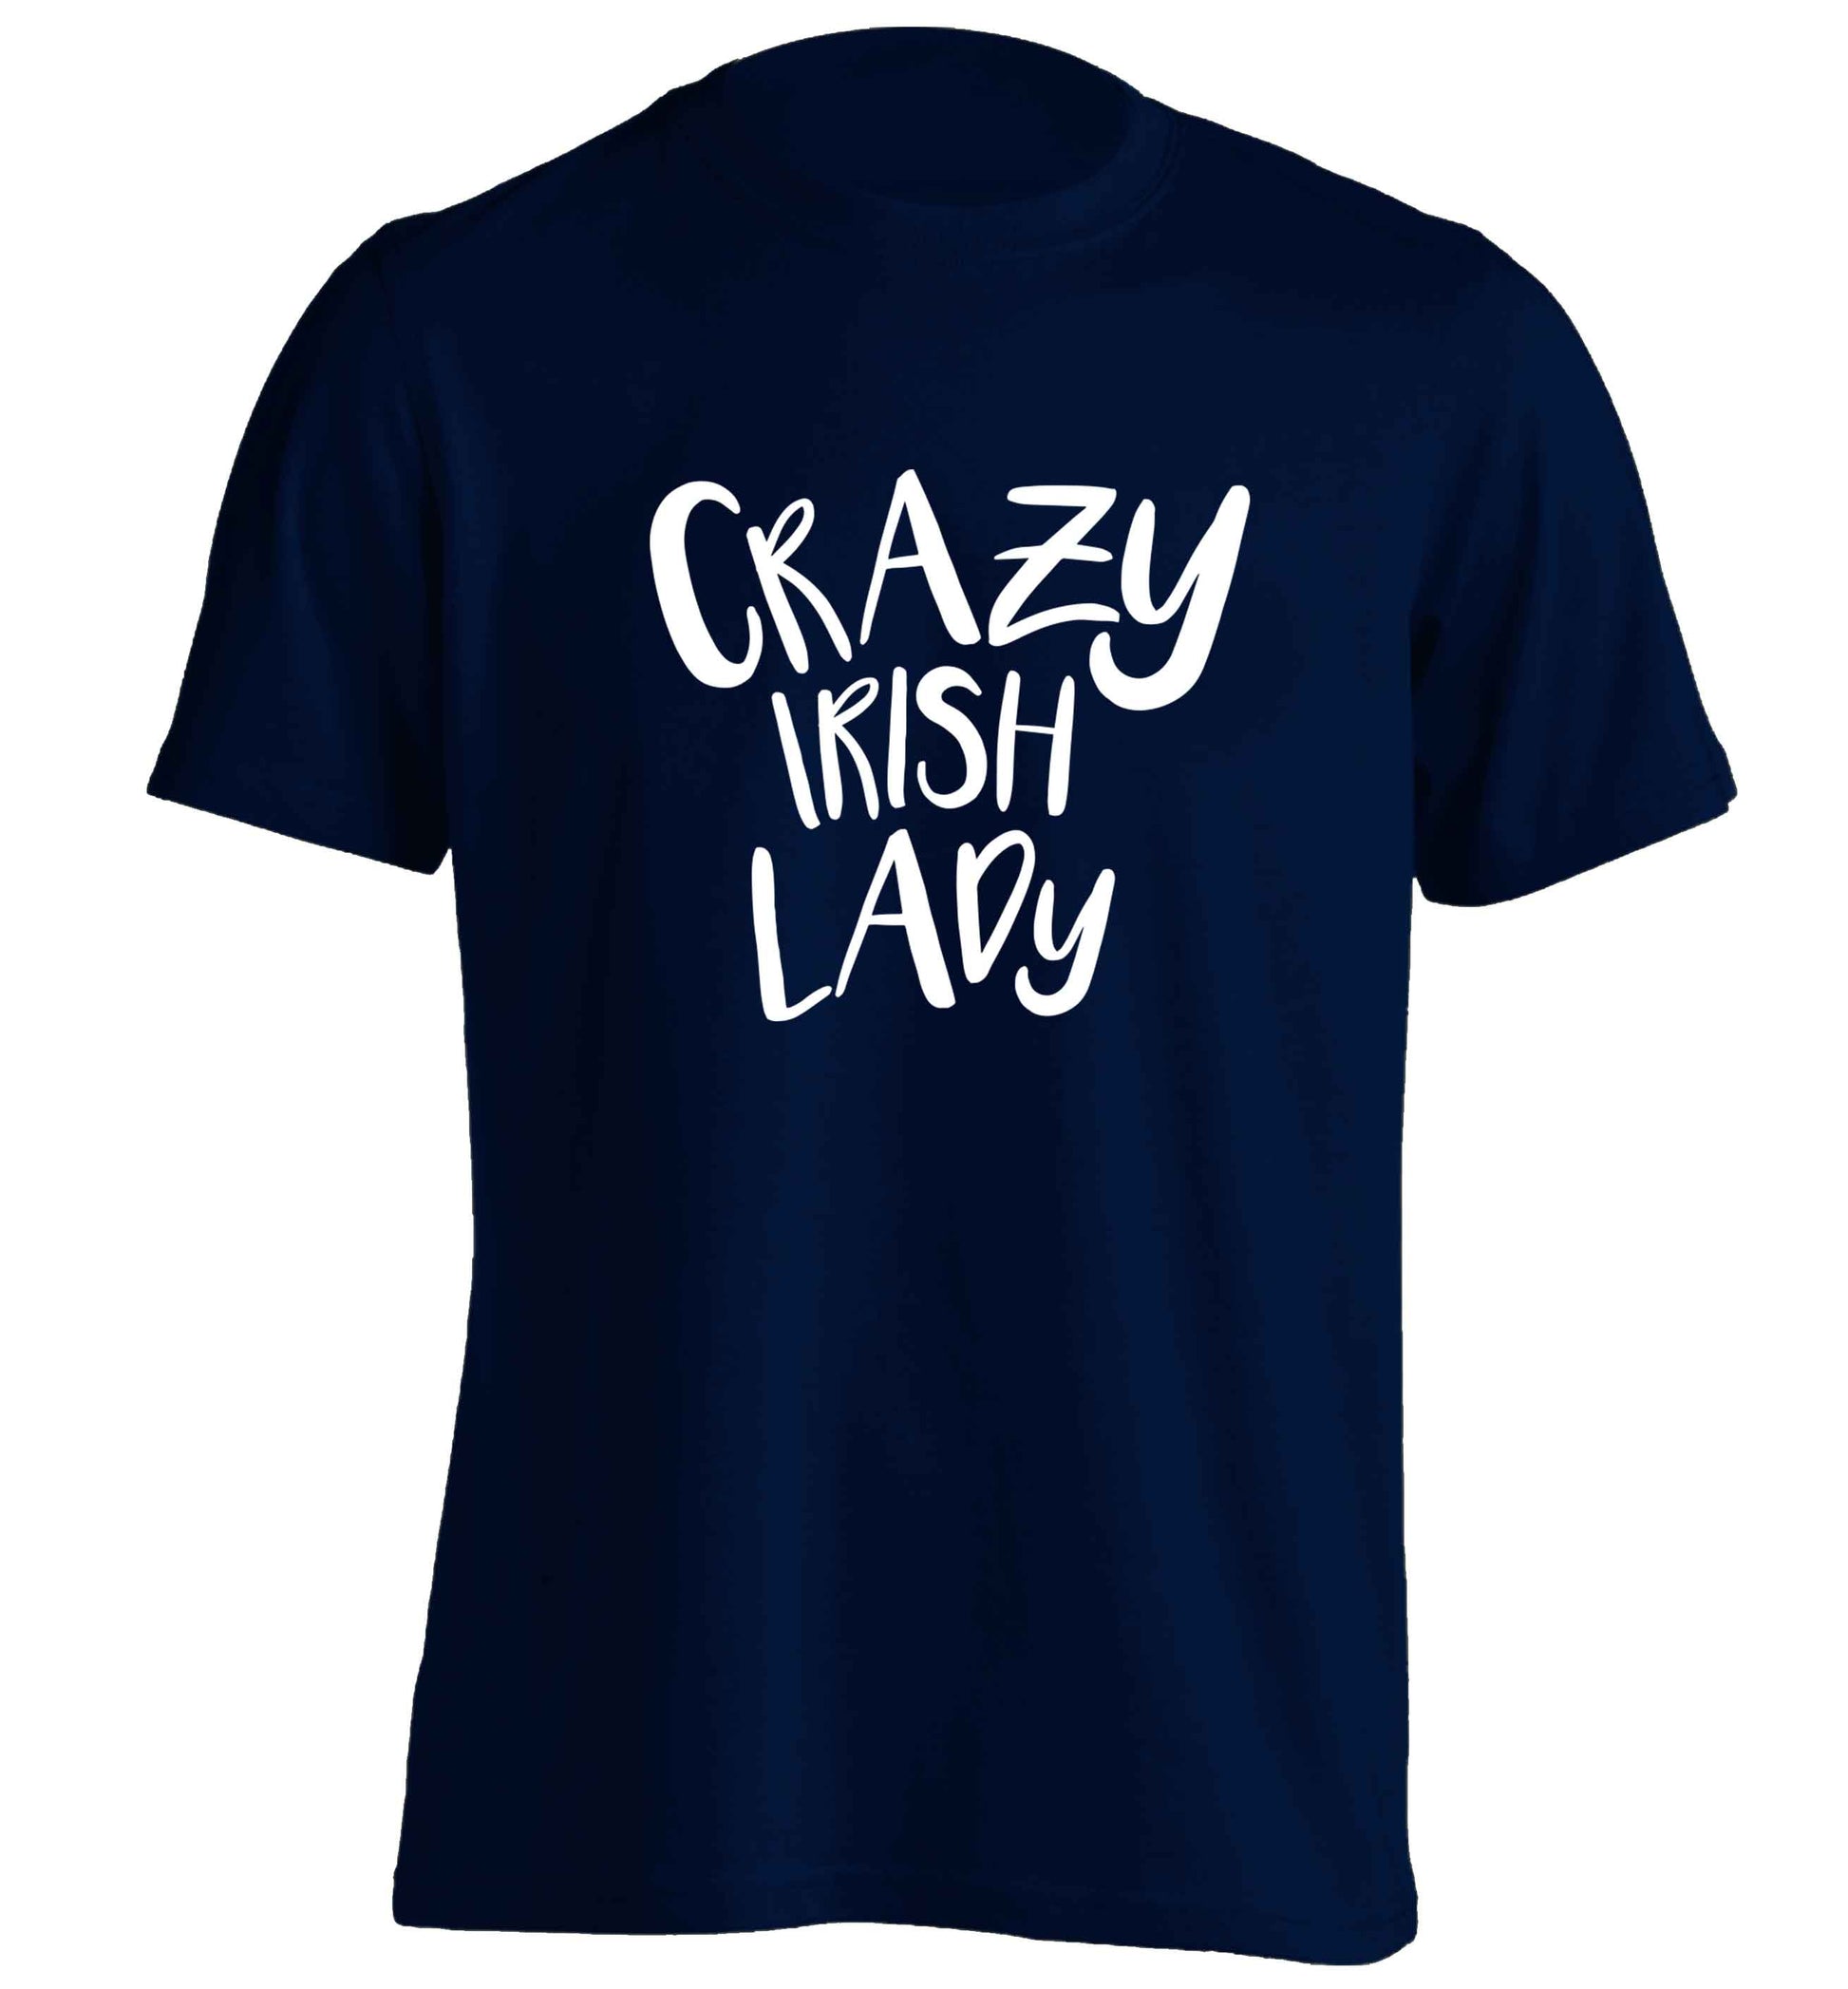 Crazy Irish lady adults unisex navy Tshirt 2XL